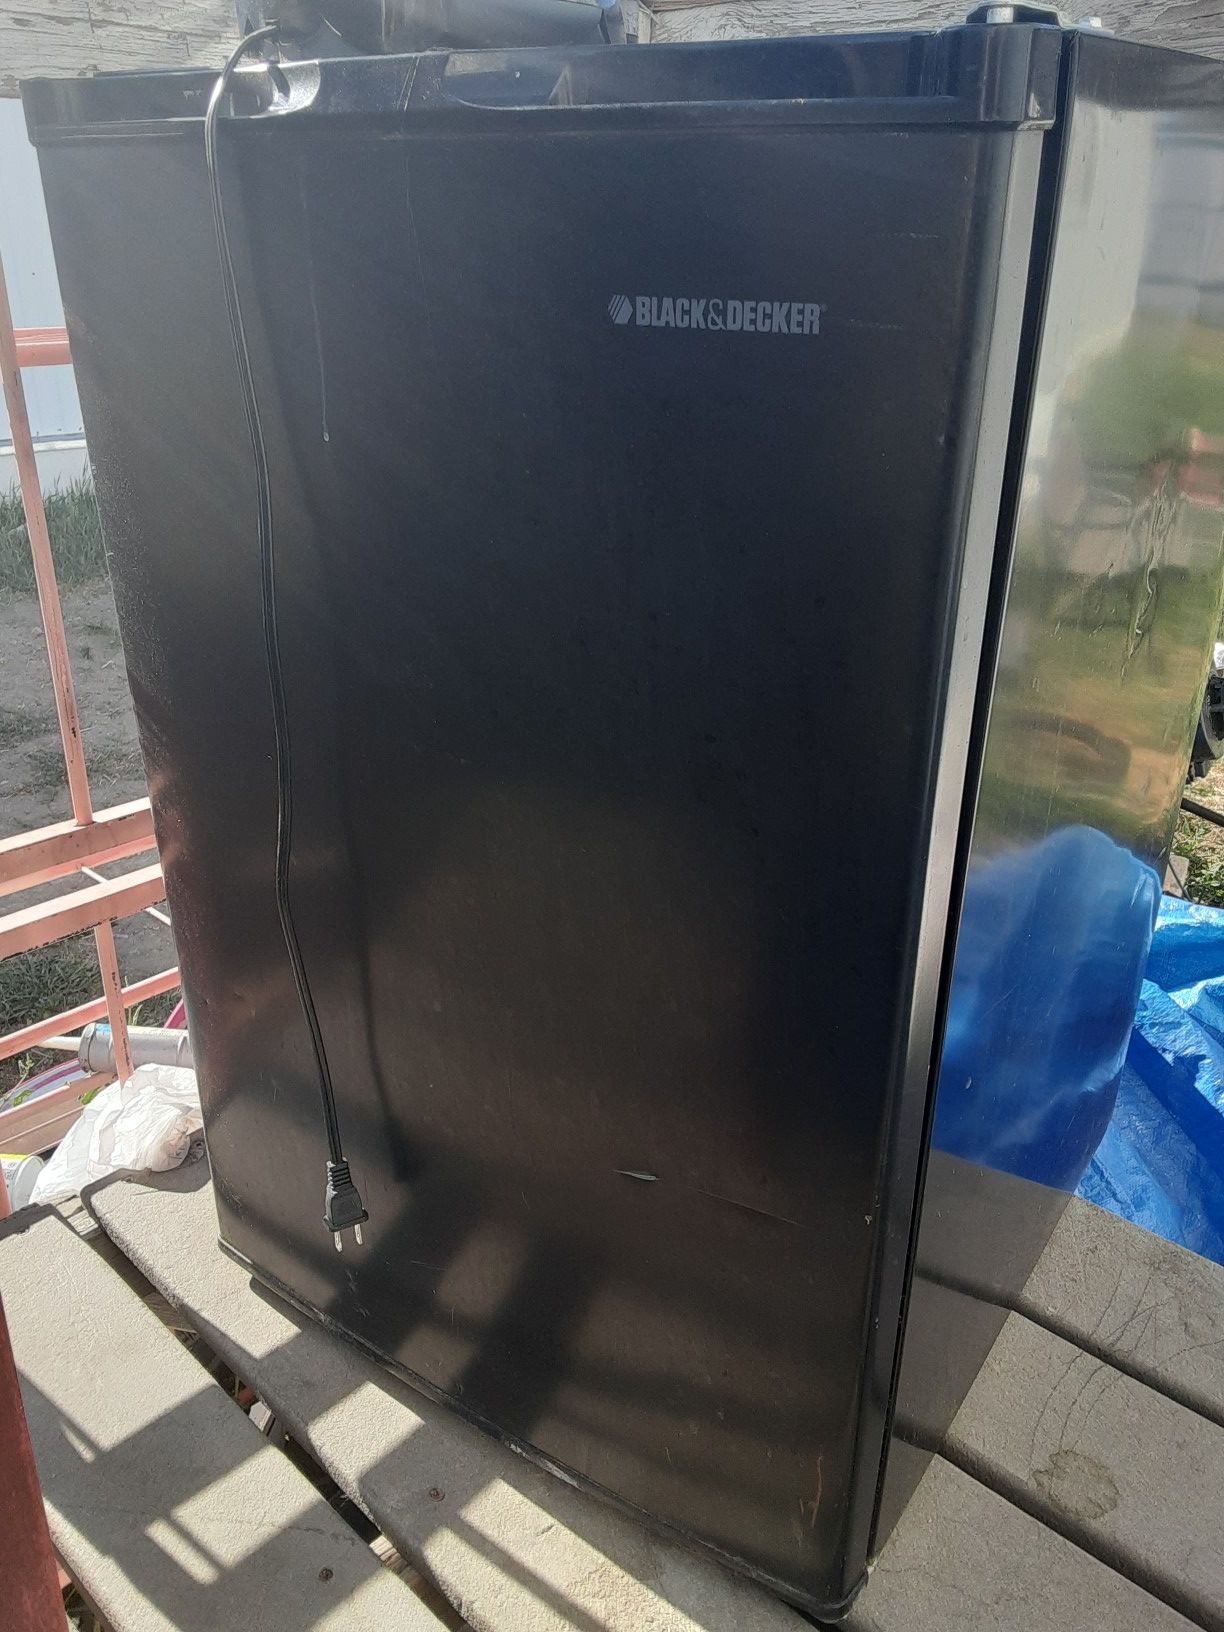 Mini fridge (black and Decker), AC UNIT (window unit), microwave (emerson)